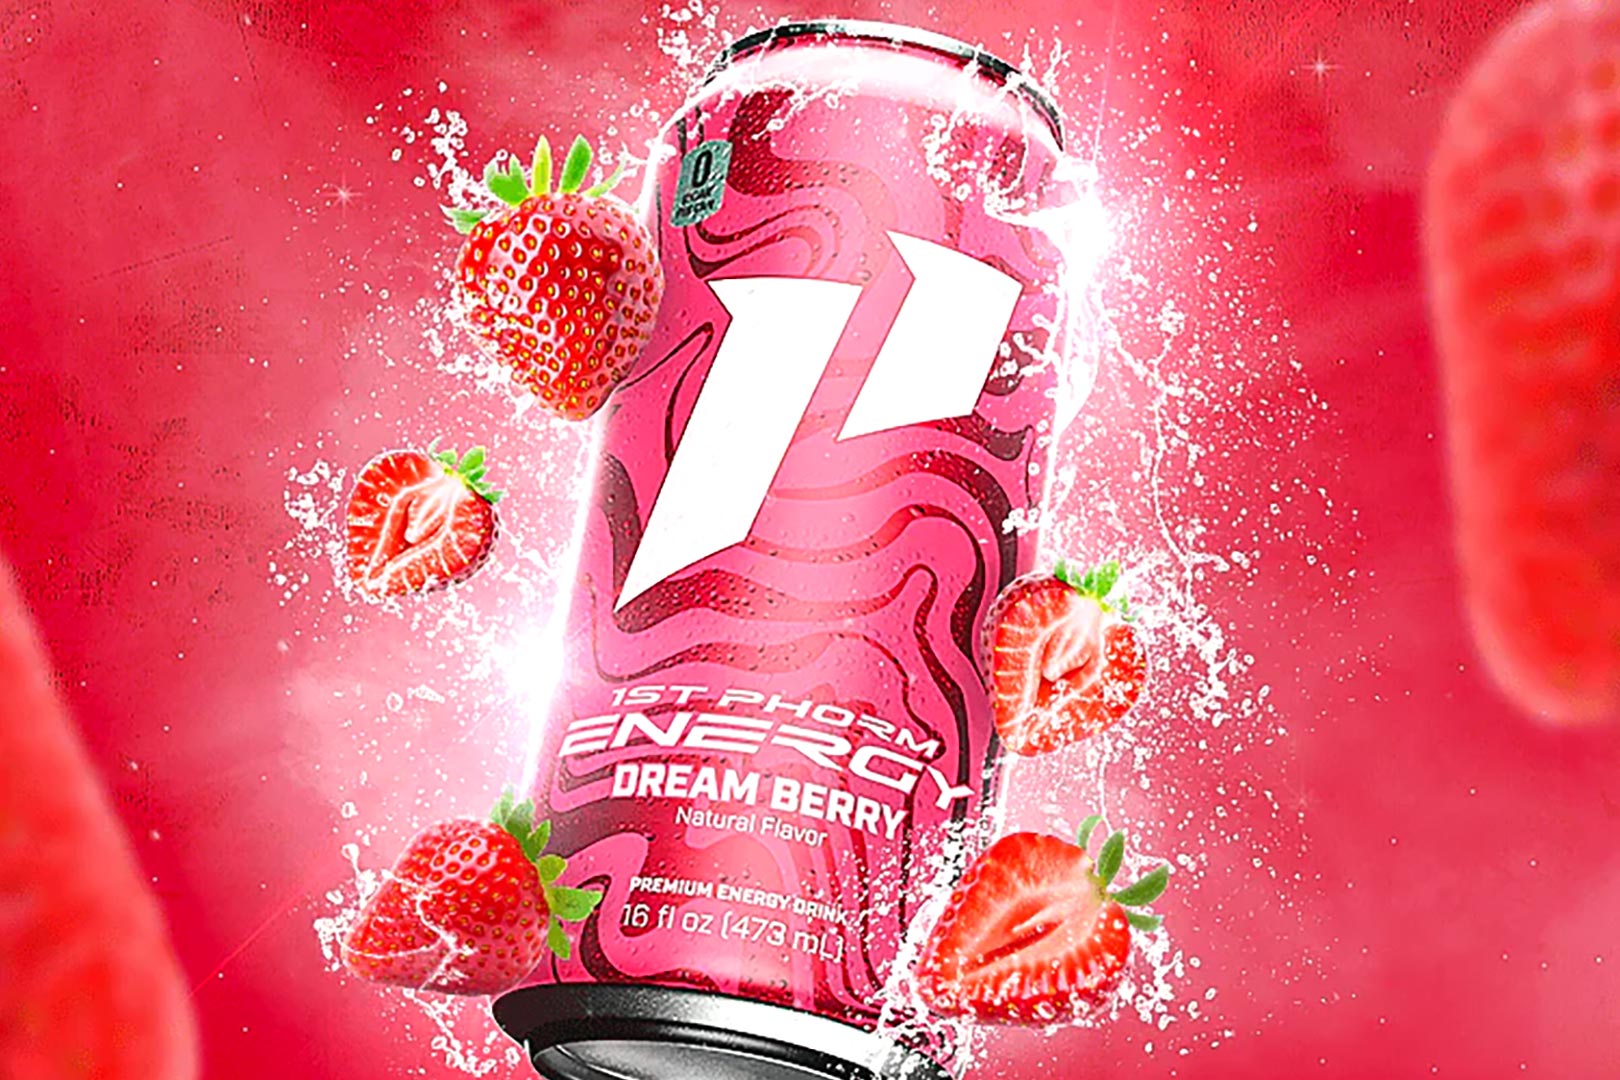 Dream Berry 1st Phorm Energy Drink